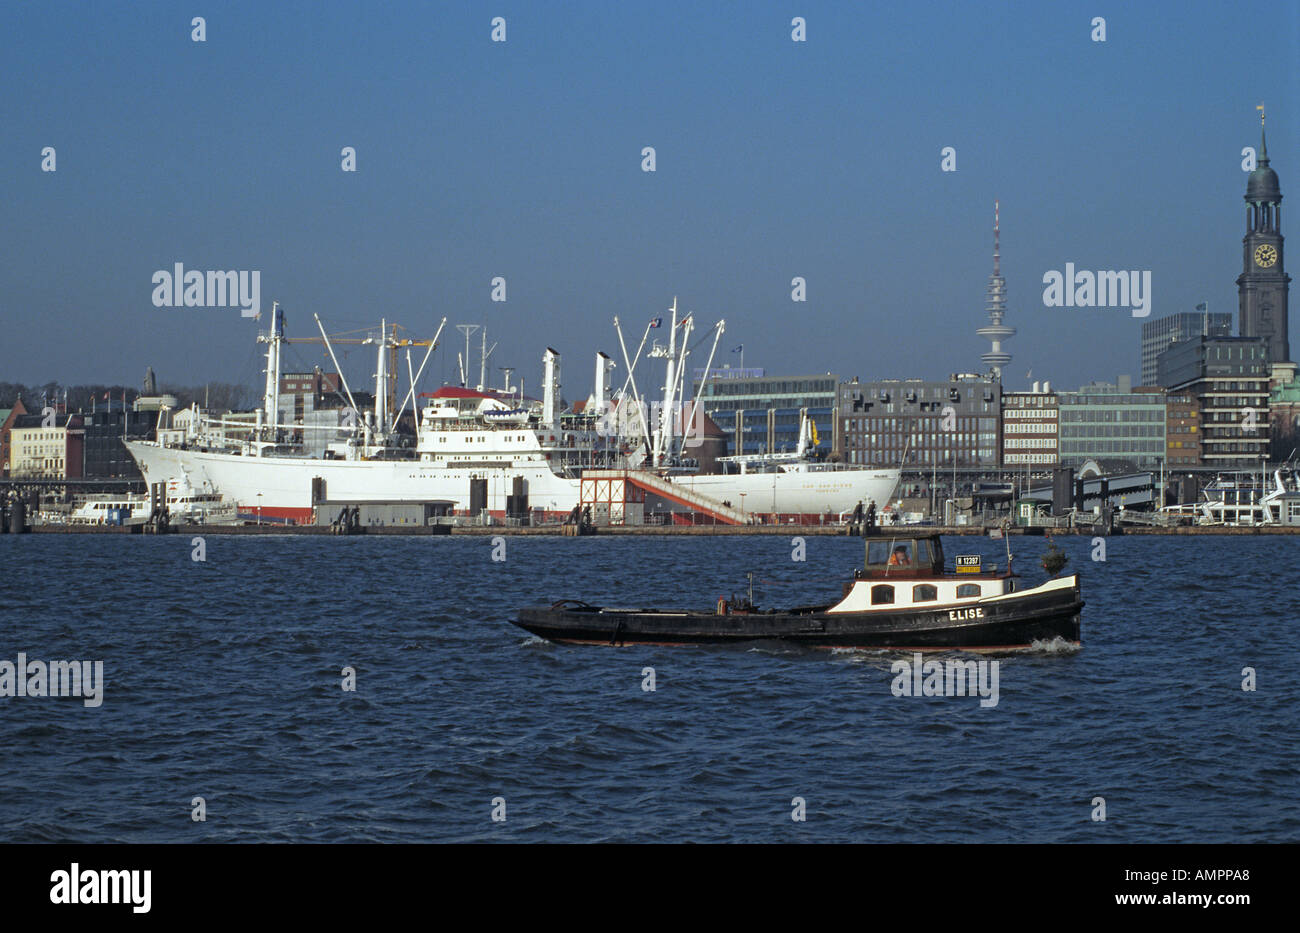 Piccola barca passando vintage cappuccio nave San Diego al Porto di Amburgo Germania Foto Stock